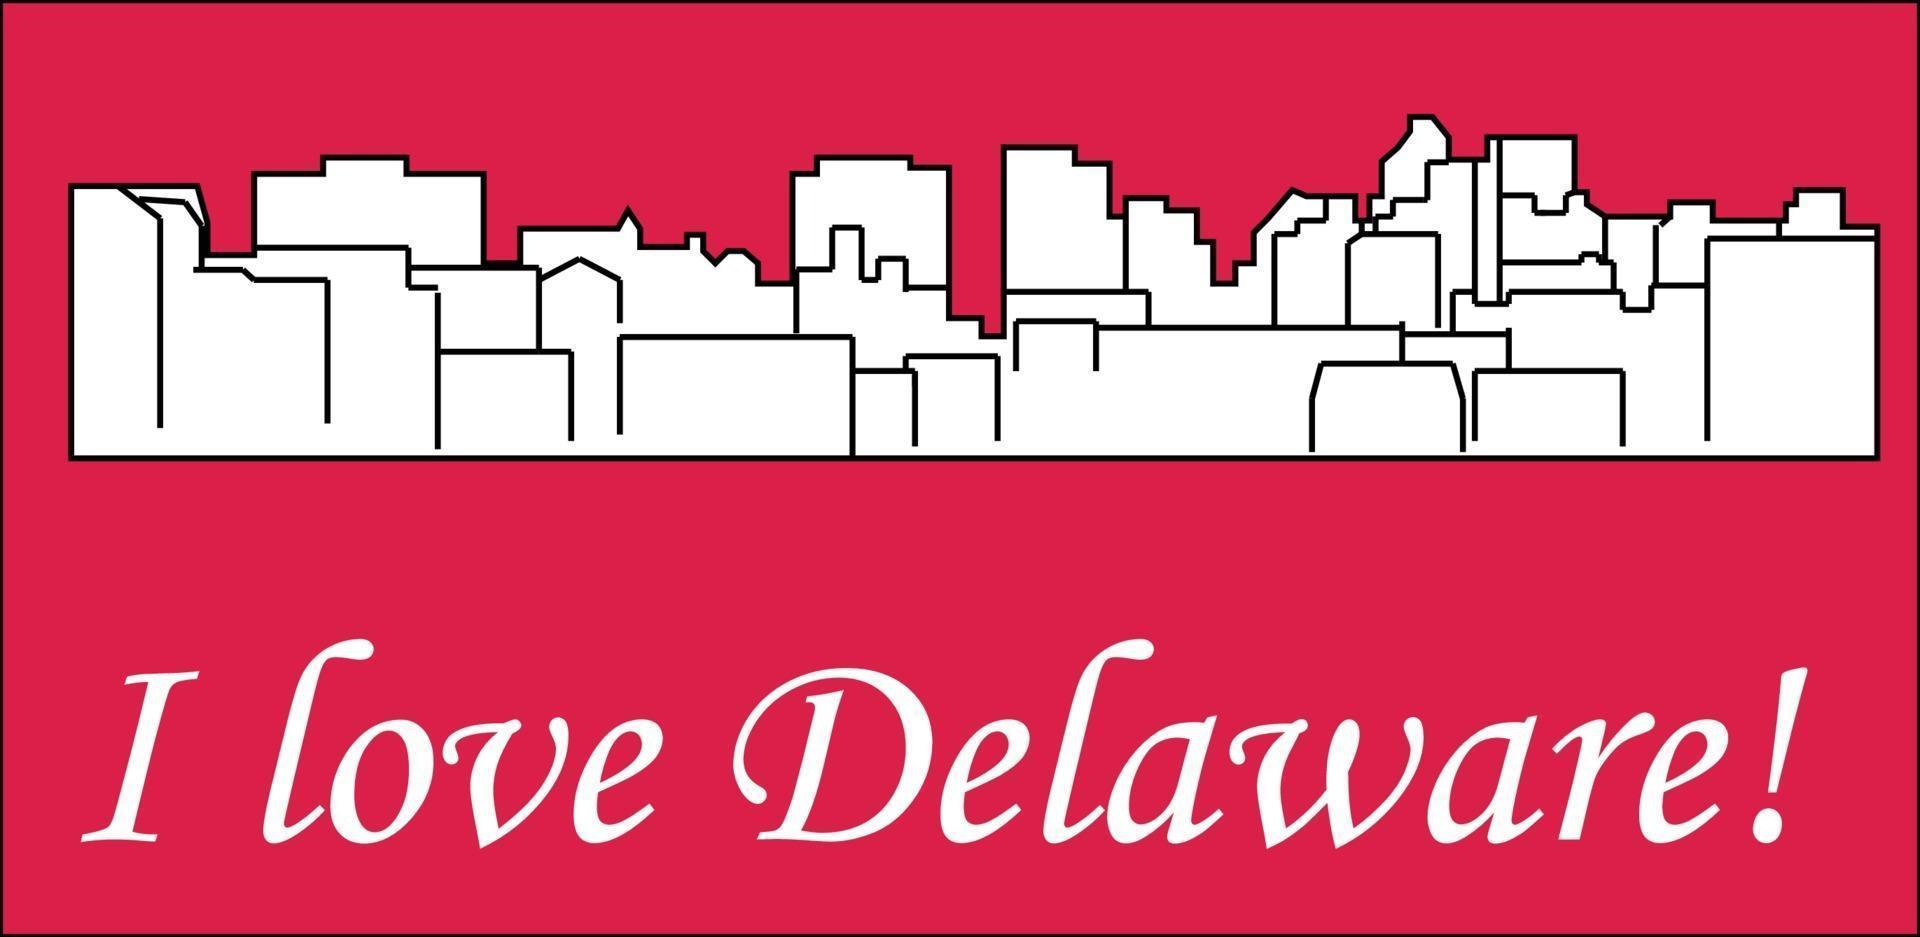 Dover Delawarecity silhouette vector